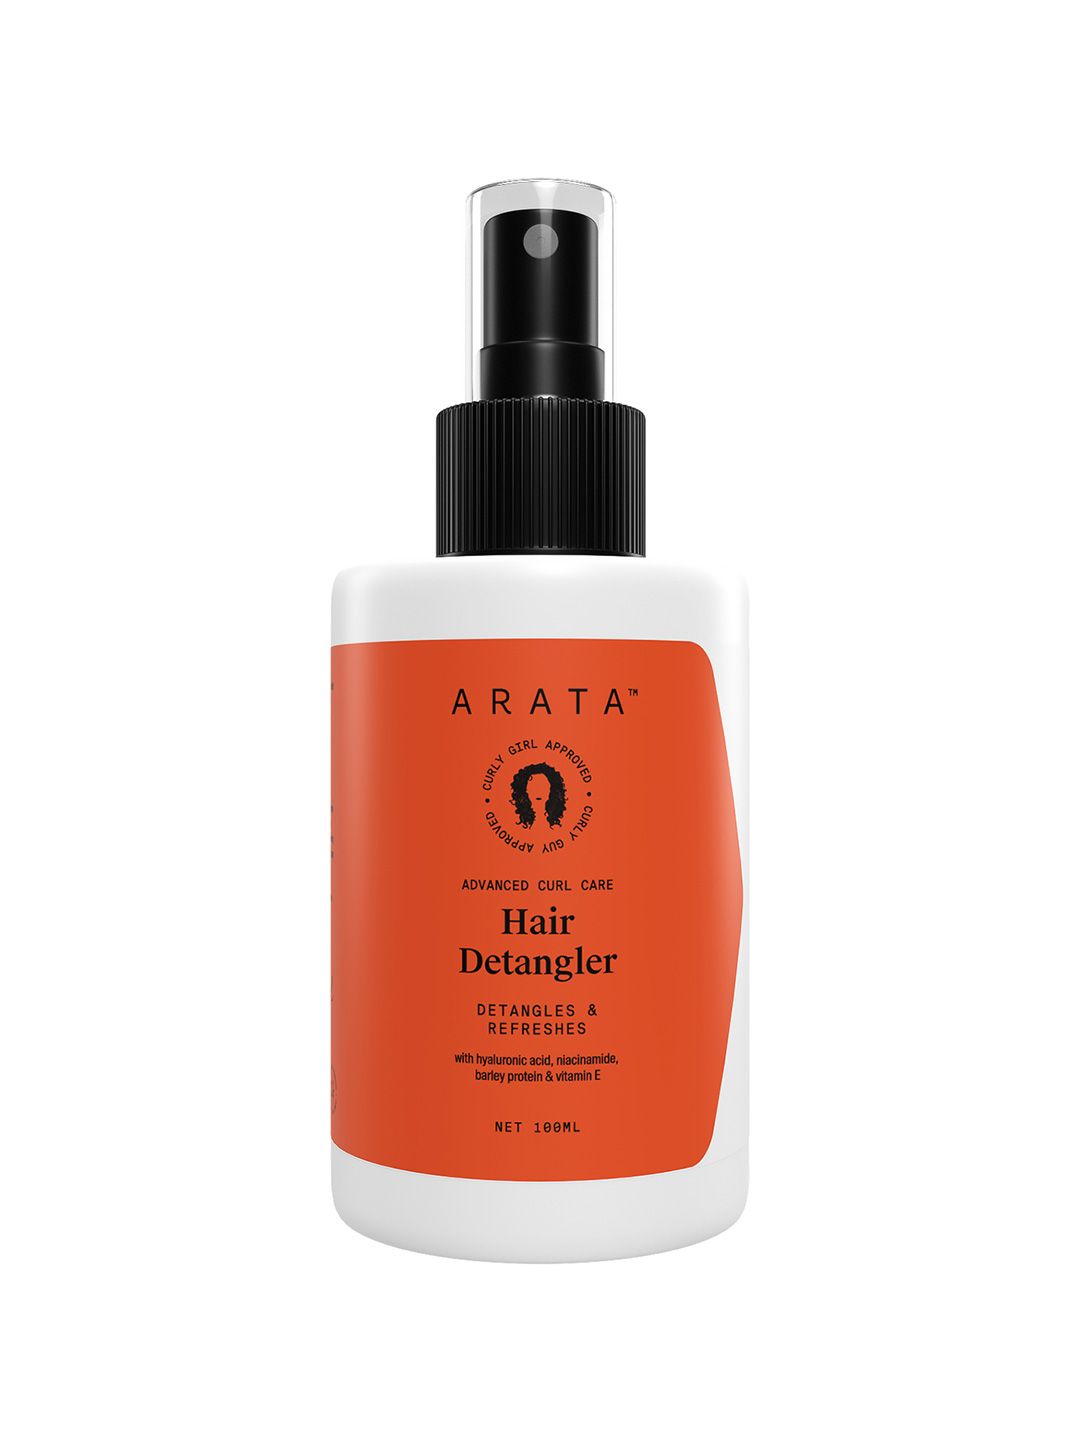 ARATA Advanced Curl Care Vegan Hair Detangler Gel 100 ml Price in India